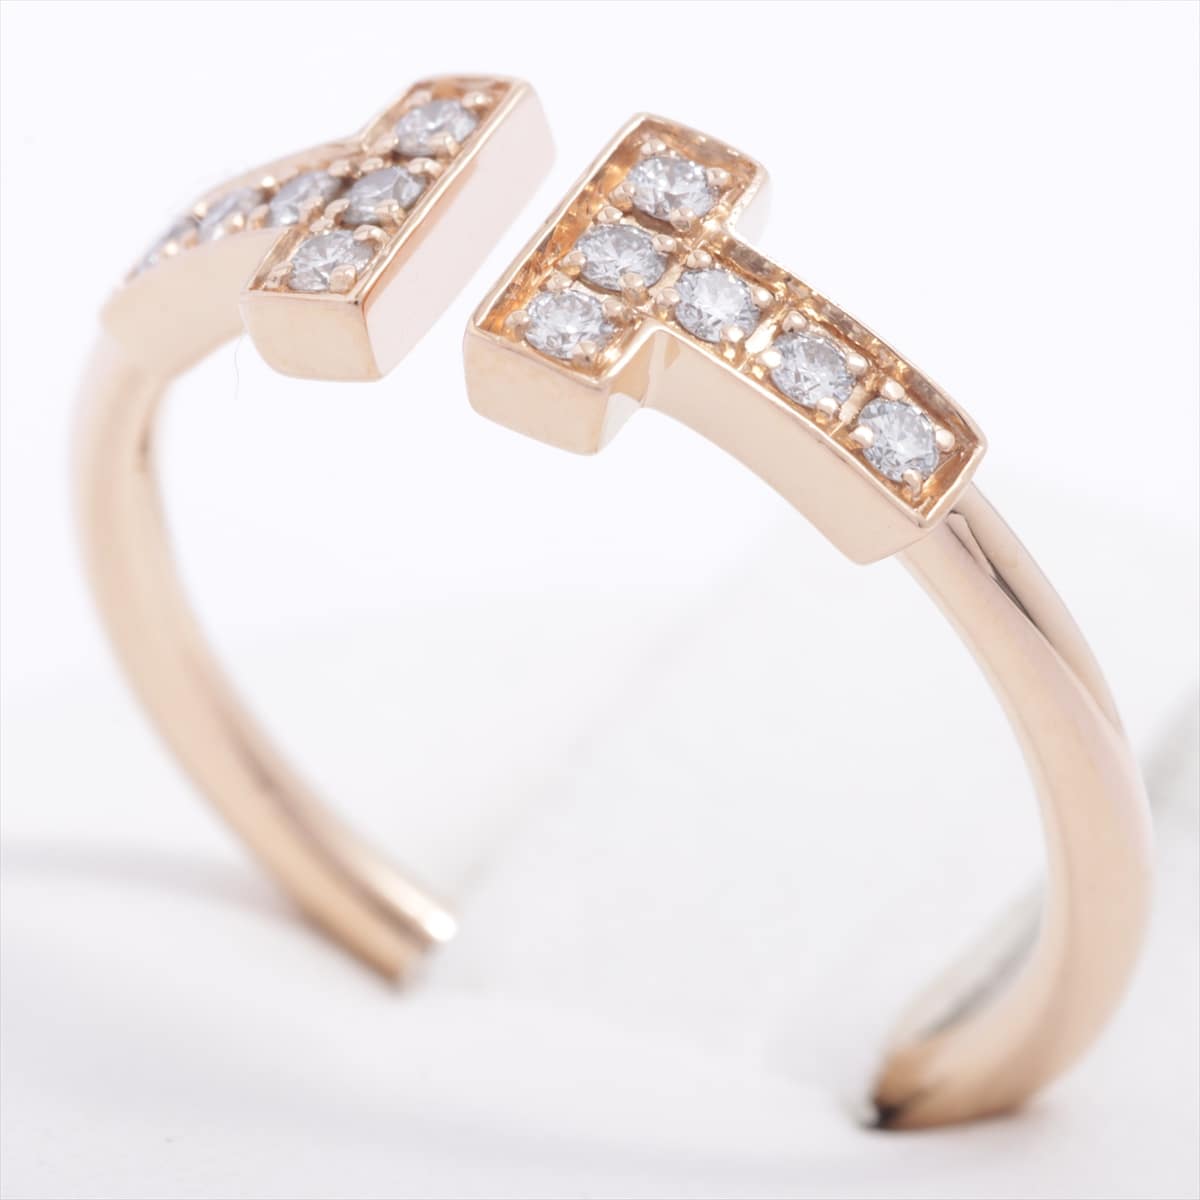 Tiffany T Wire diamond rings 750 PG 2.2g